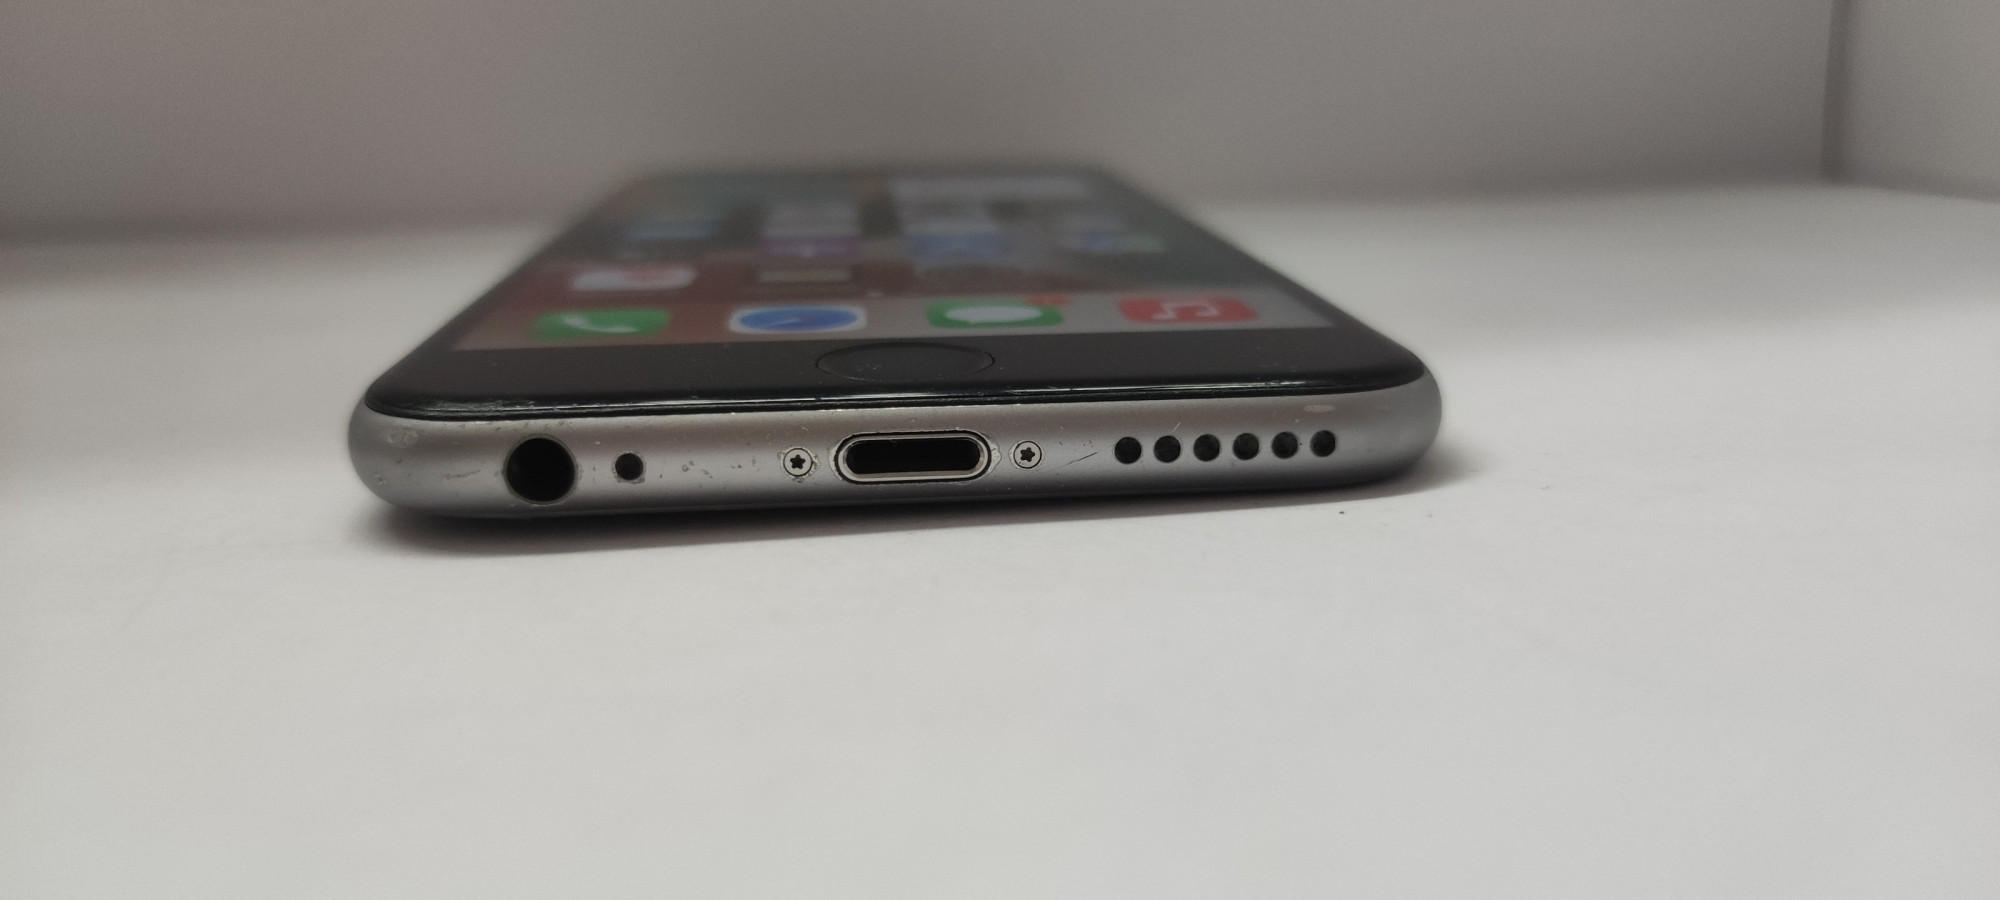 Apple iPhone 6s 16Gb Space Gray (MKQJ2) 2